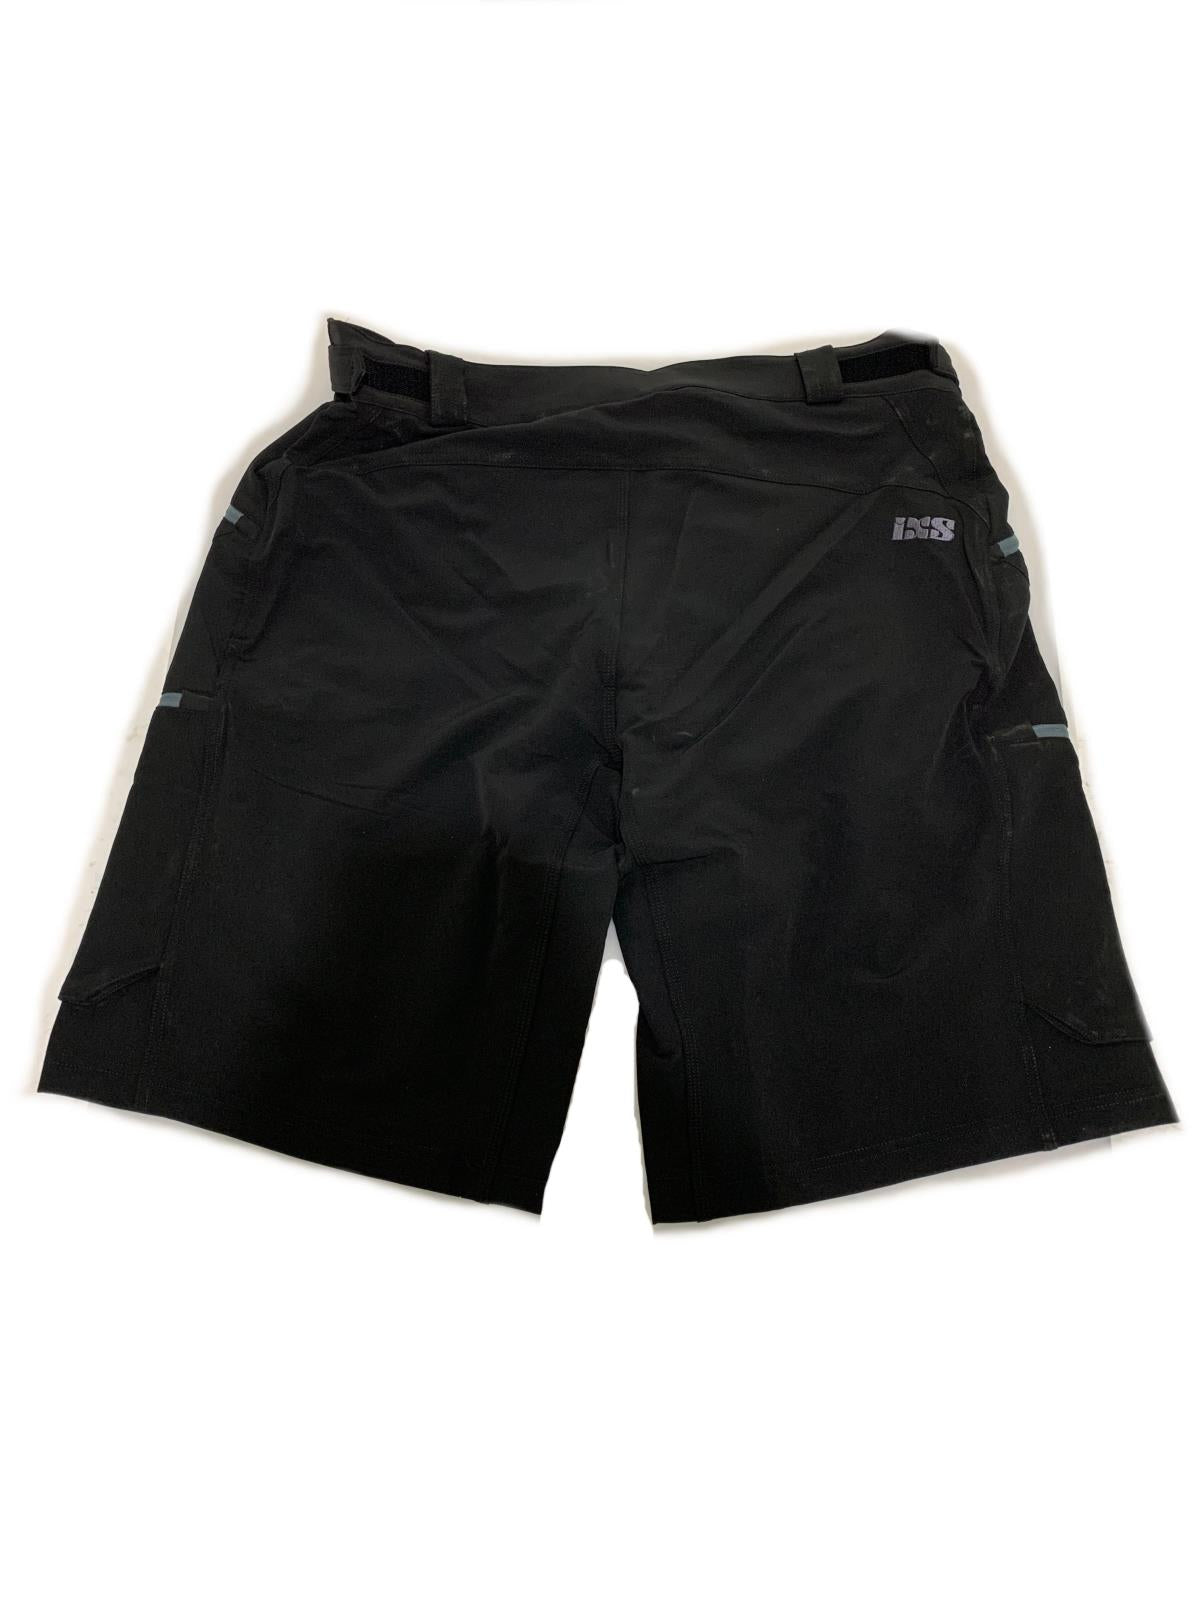 iXS Tema Padded Shorts - Men’s Cycling Bike Bicycle Black XXL Extra Extra Large